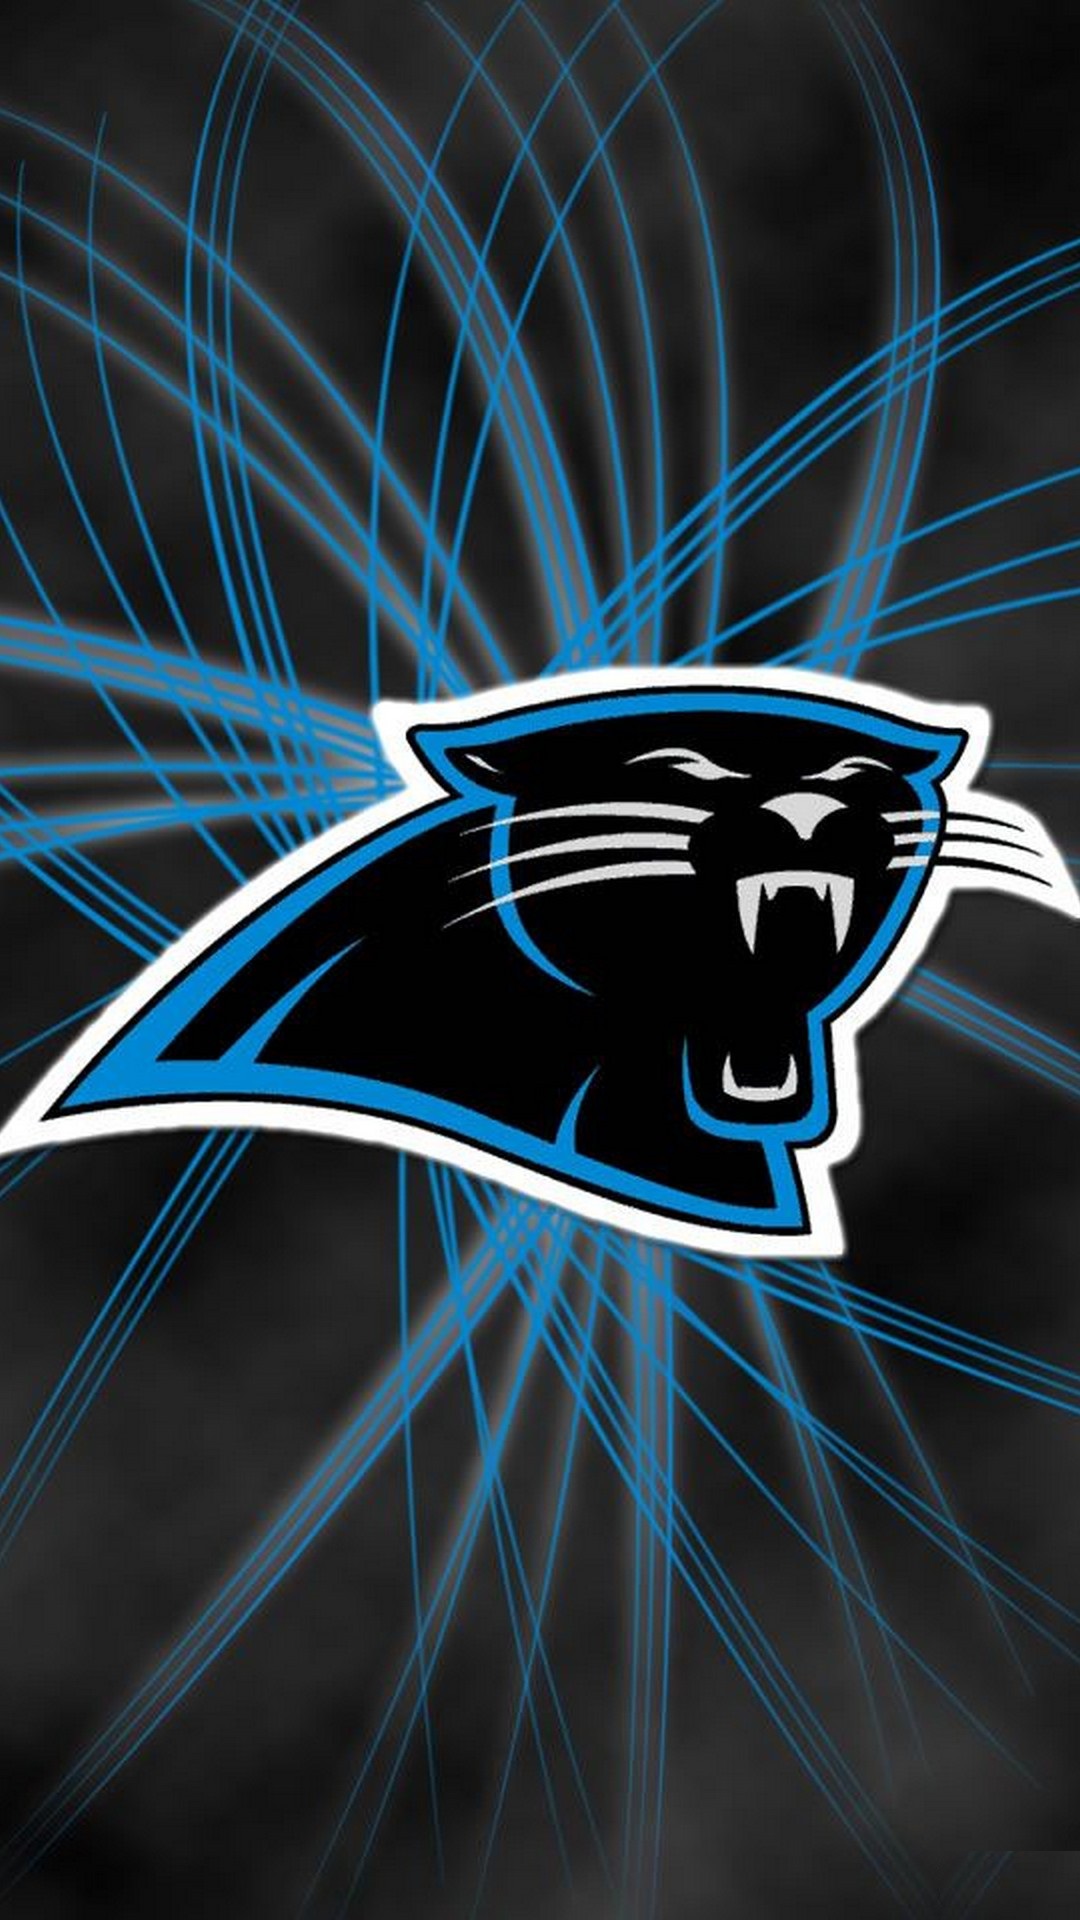 Carolina Panthers iPhone Wallpaper High Quality 2021 NFL